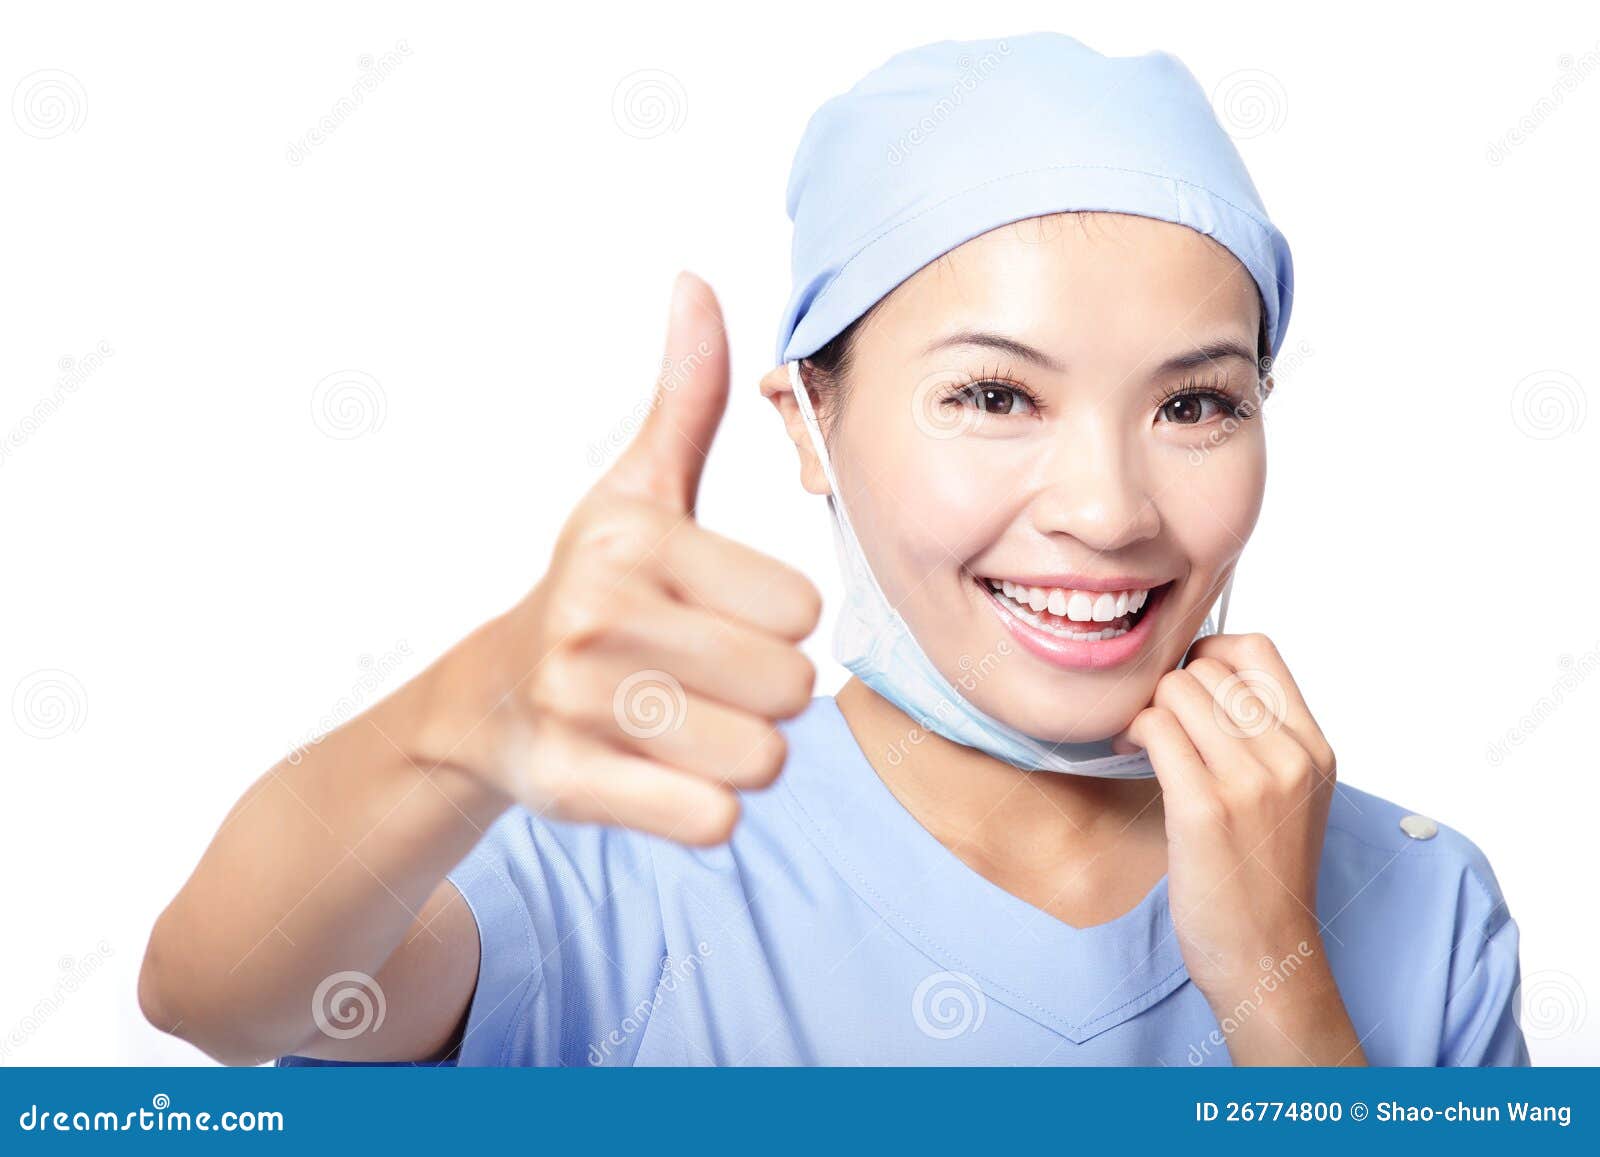 Faltou Algum Dos Apps Fitness Que Você Usa? surgeon-woman-doctor-happy-giving-thumbs-up-26774800